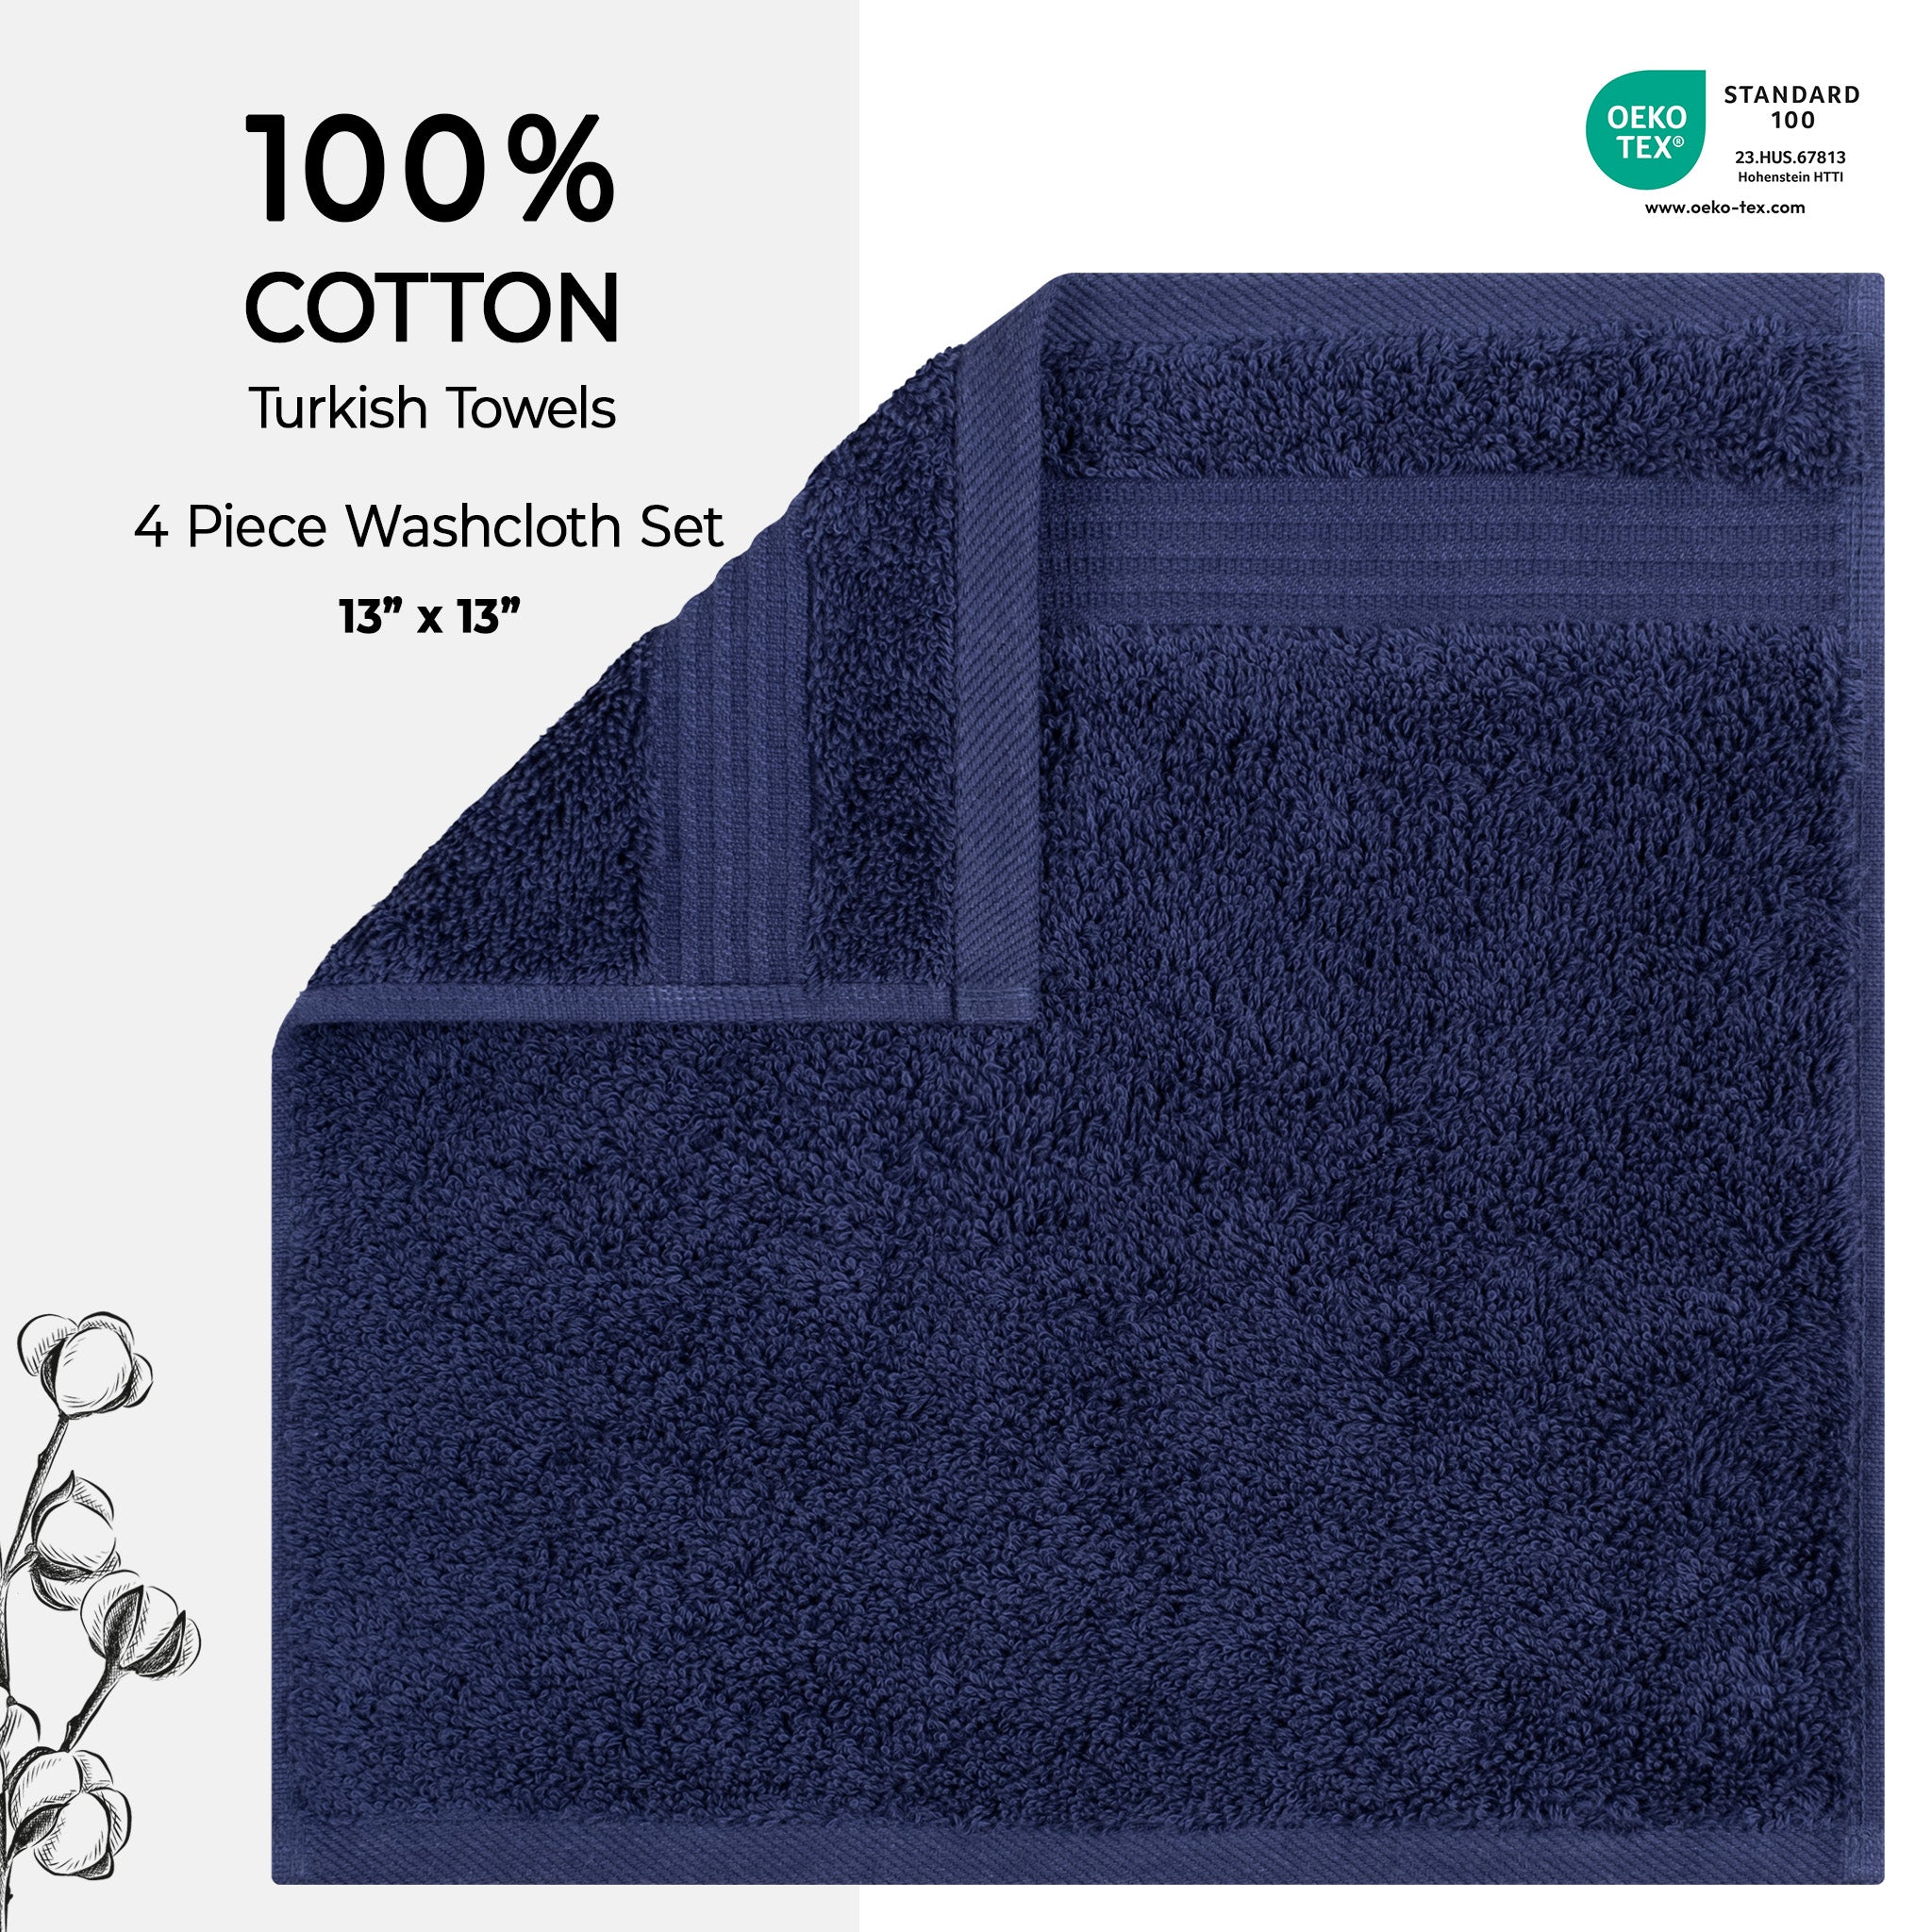 American Soft Linen Bekos 100% Cotton Turkish Towels, 4 Piece Washcloth Towel Set -navy-blue-02